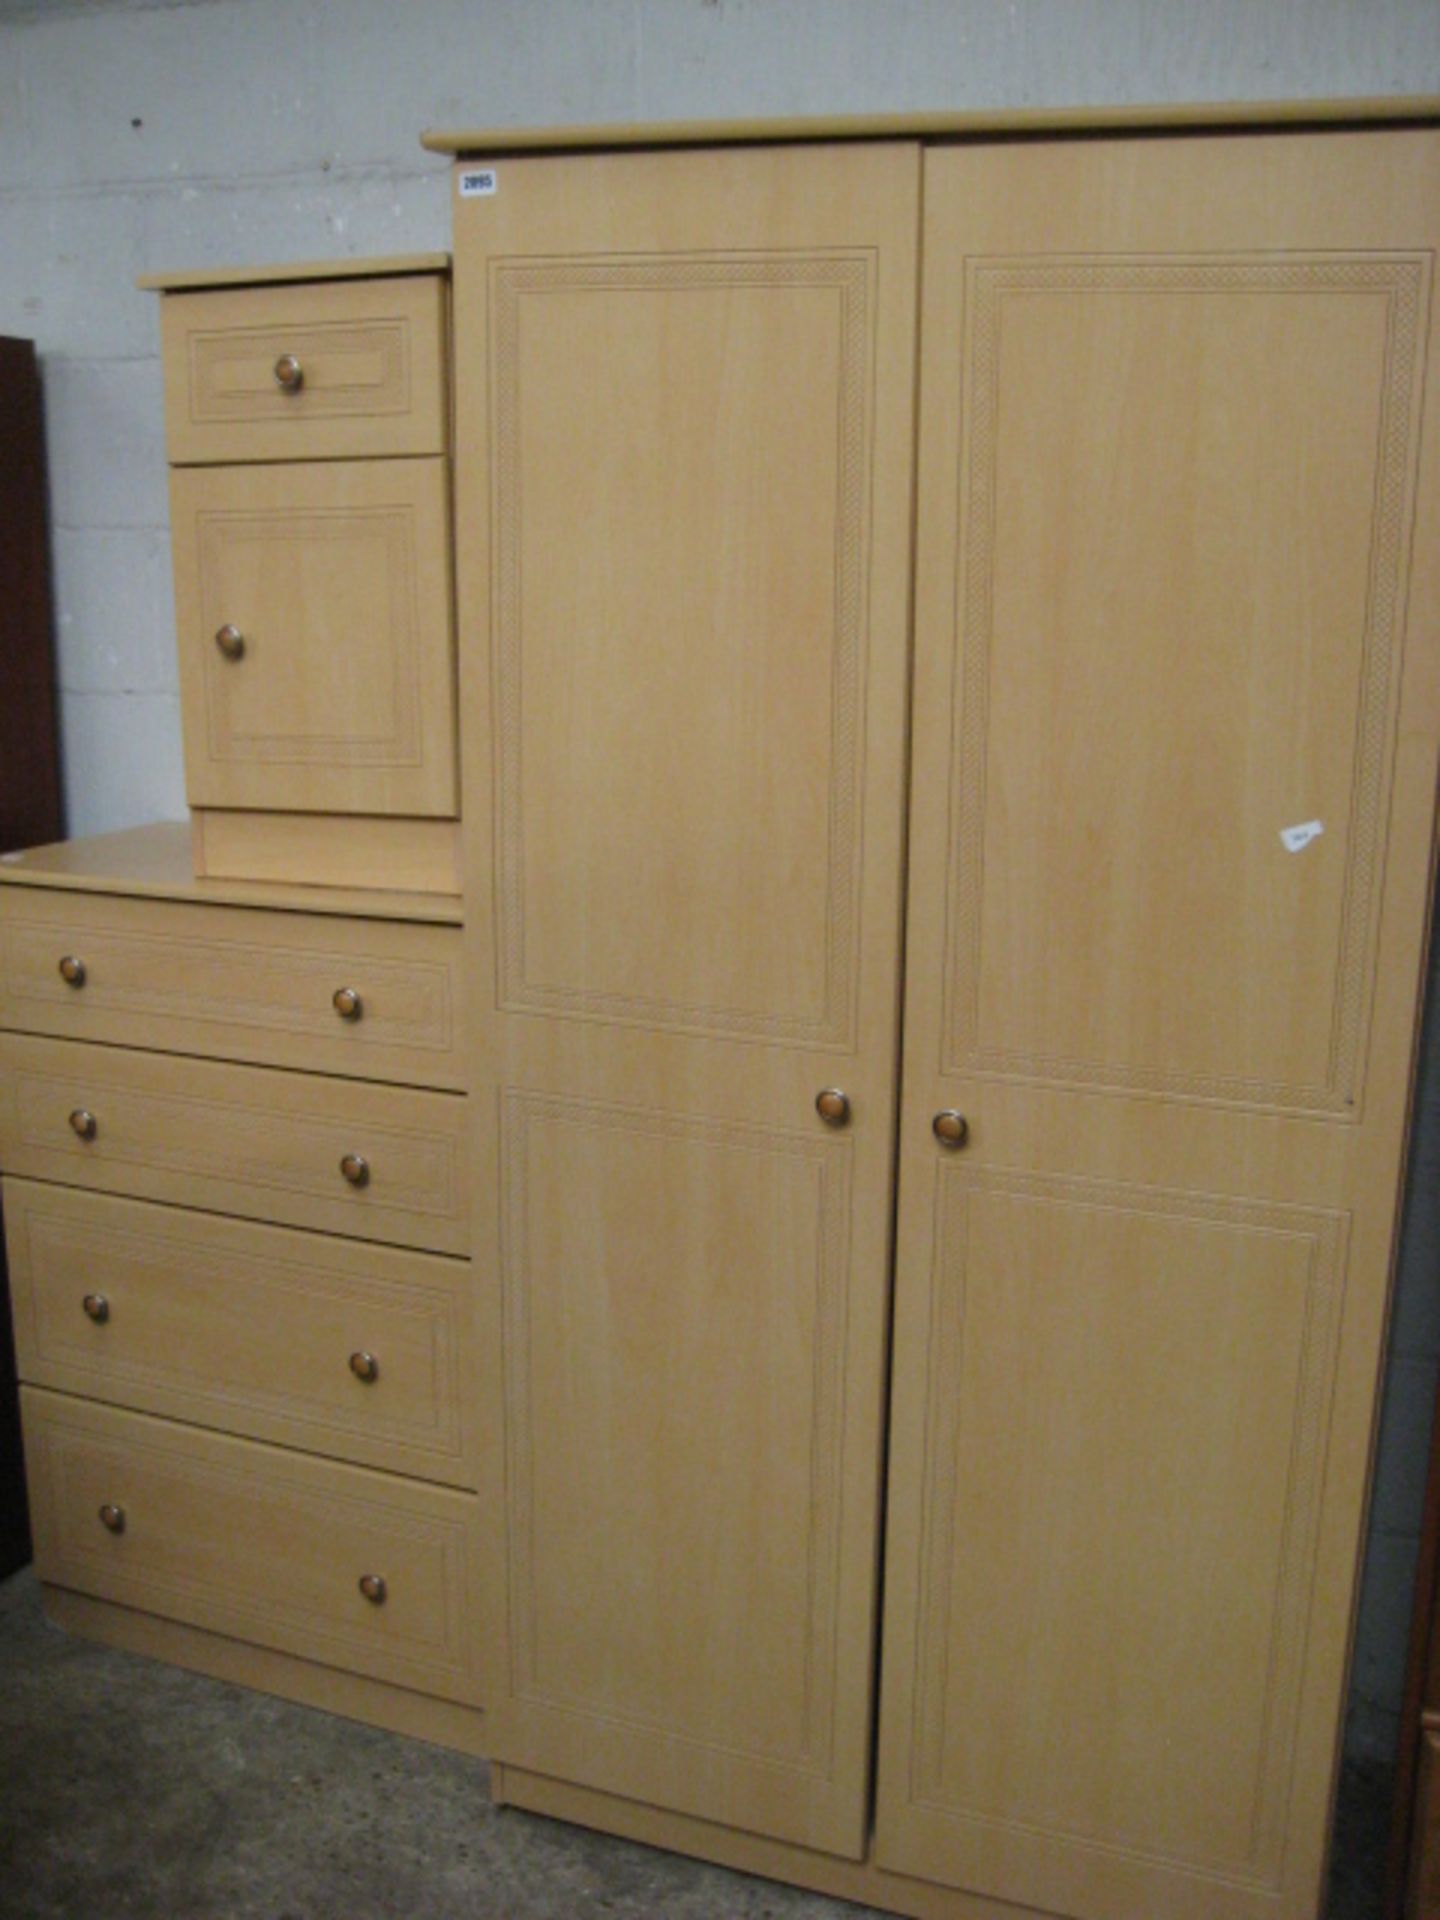 Beech effect bedroom suite comprising double door wardrobe, 4 drawer chest and matching bedside